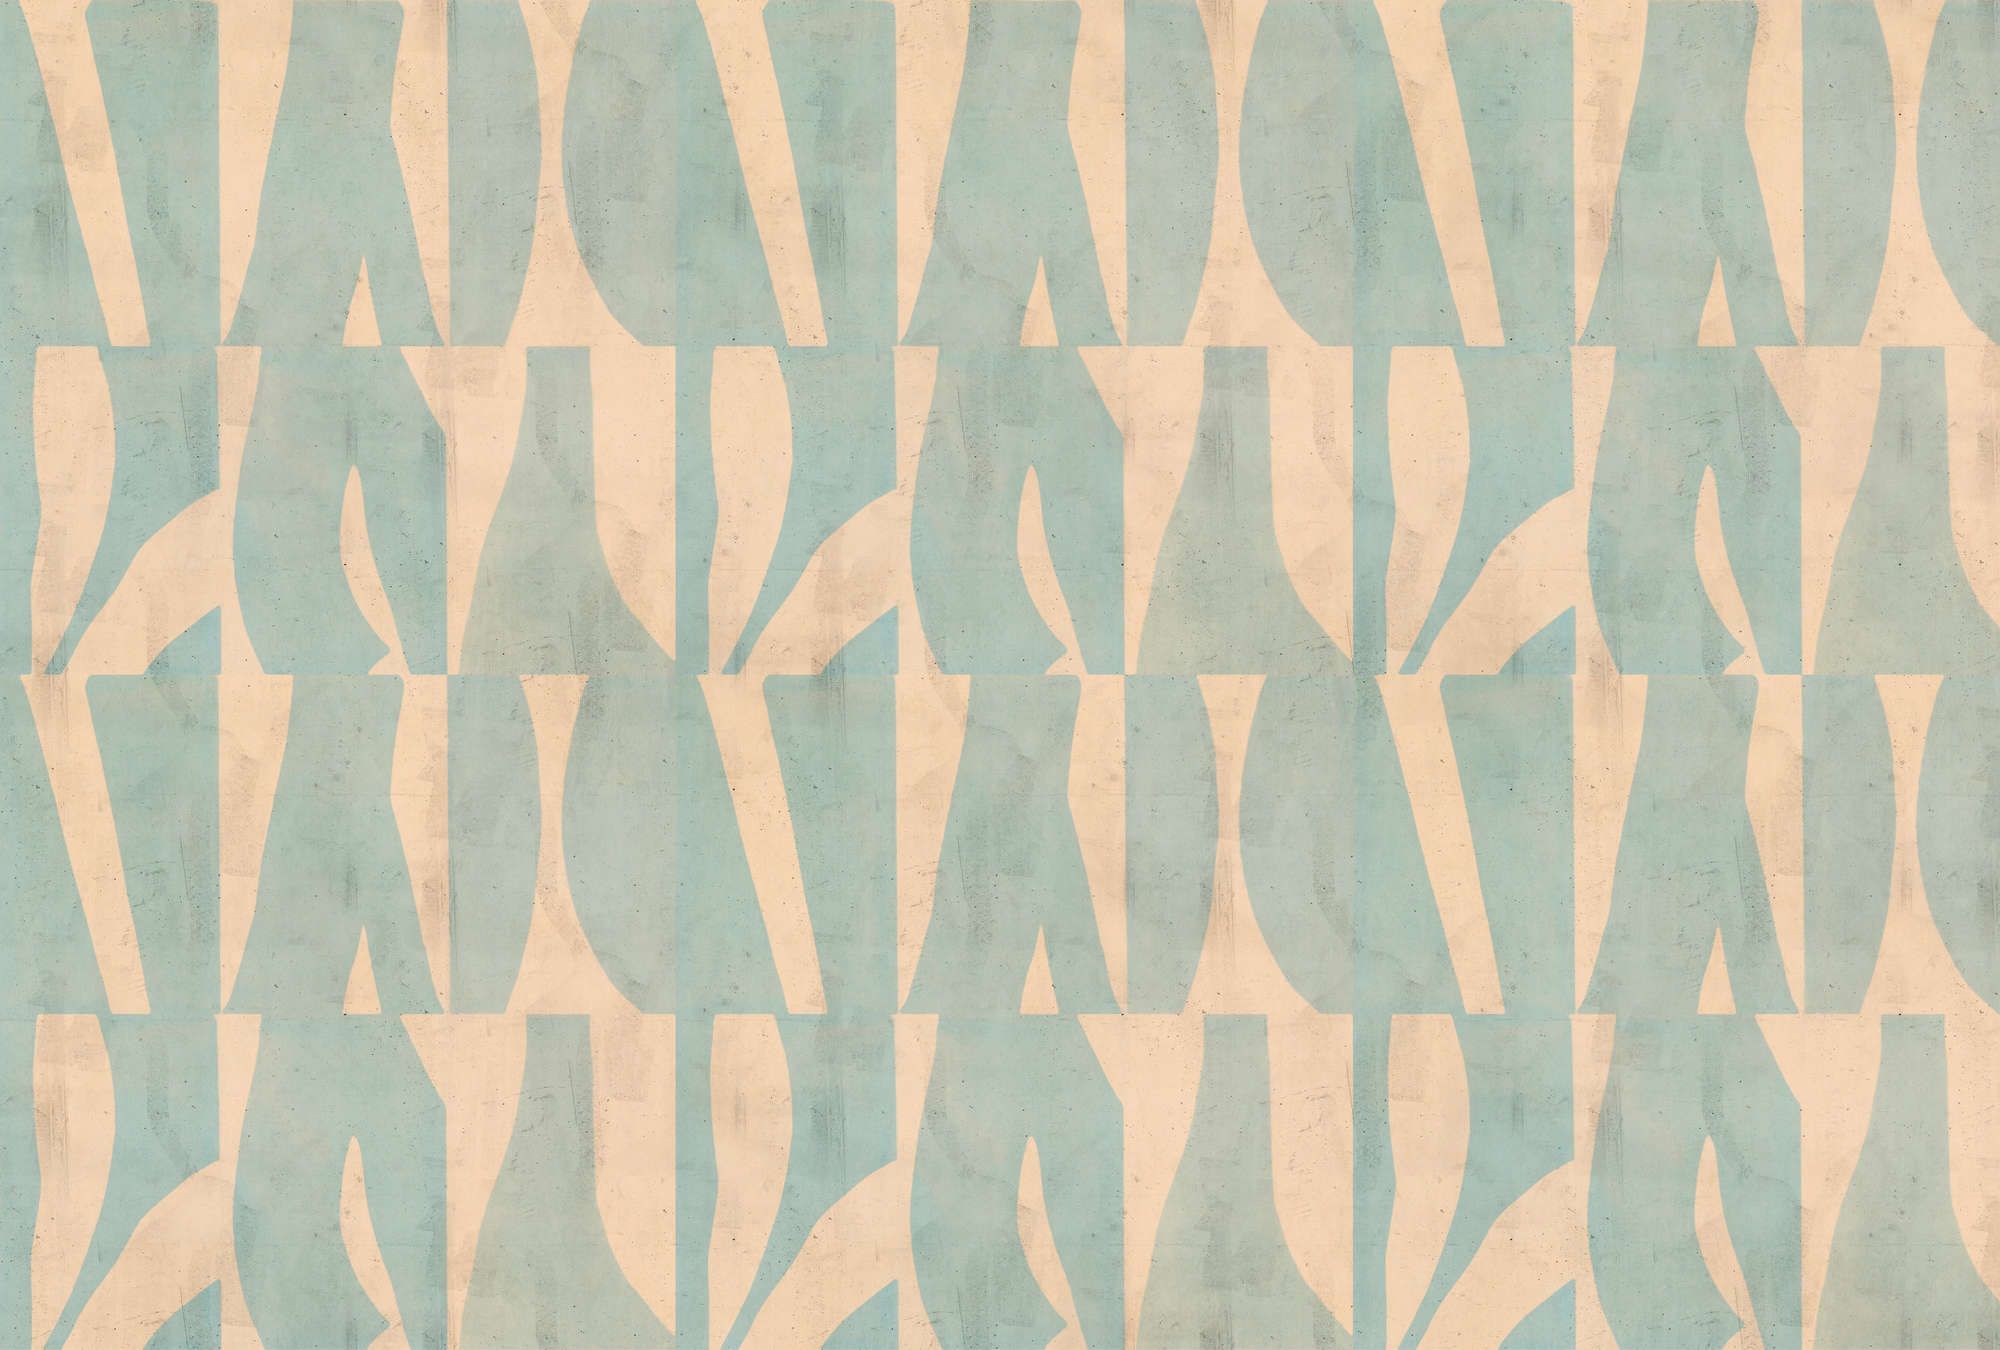             Digital behang »laila« - Grafisch patroon op betonpleistertextuur - Beige, mintgroen | Glad, licht glanzend premium vliesmateriaal
        